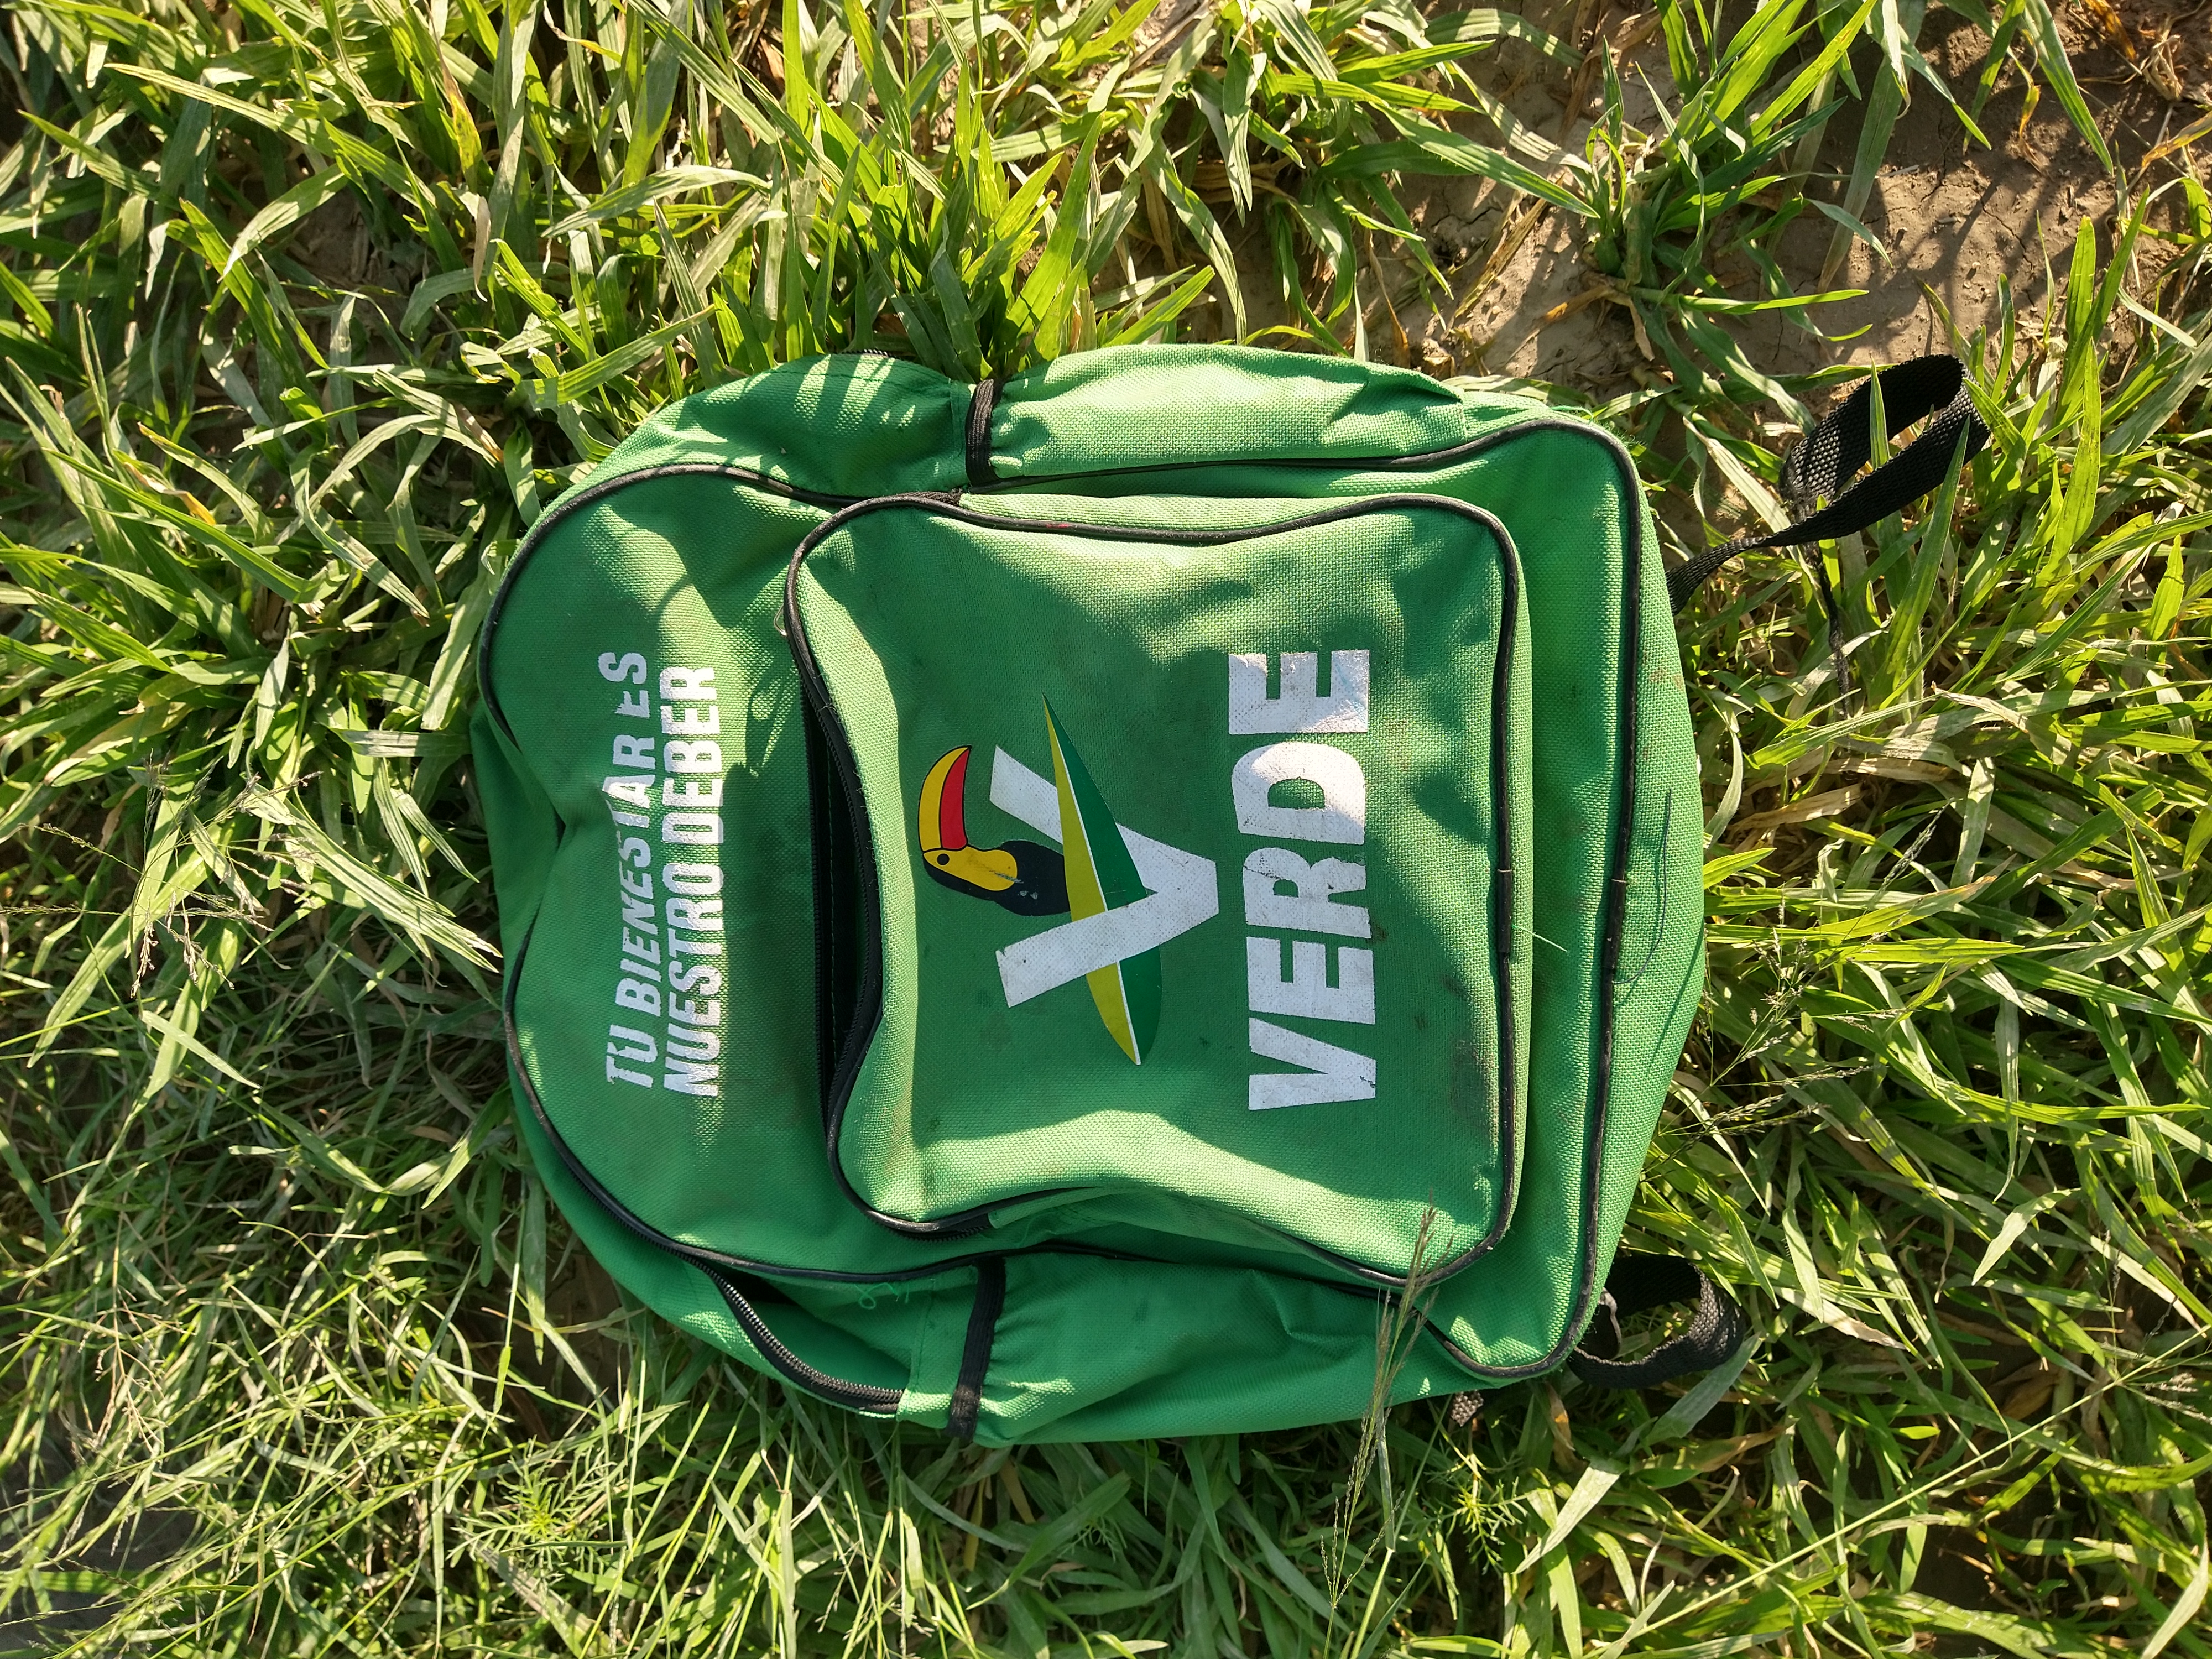 File:Objeto mochila del Verde - Wikimedia Commons